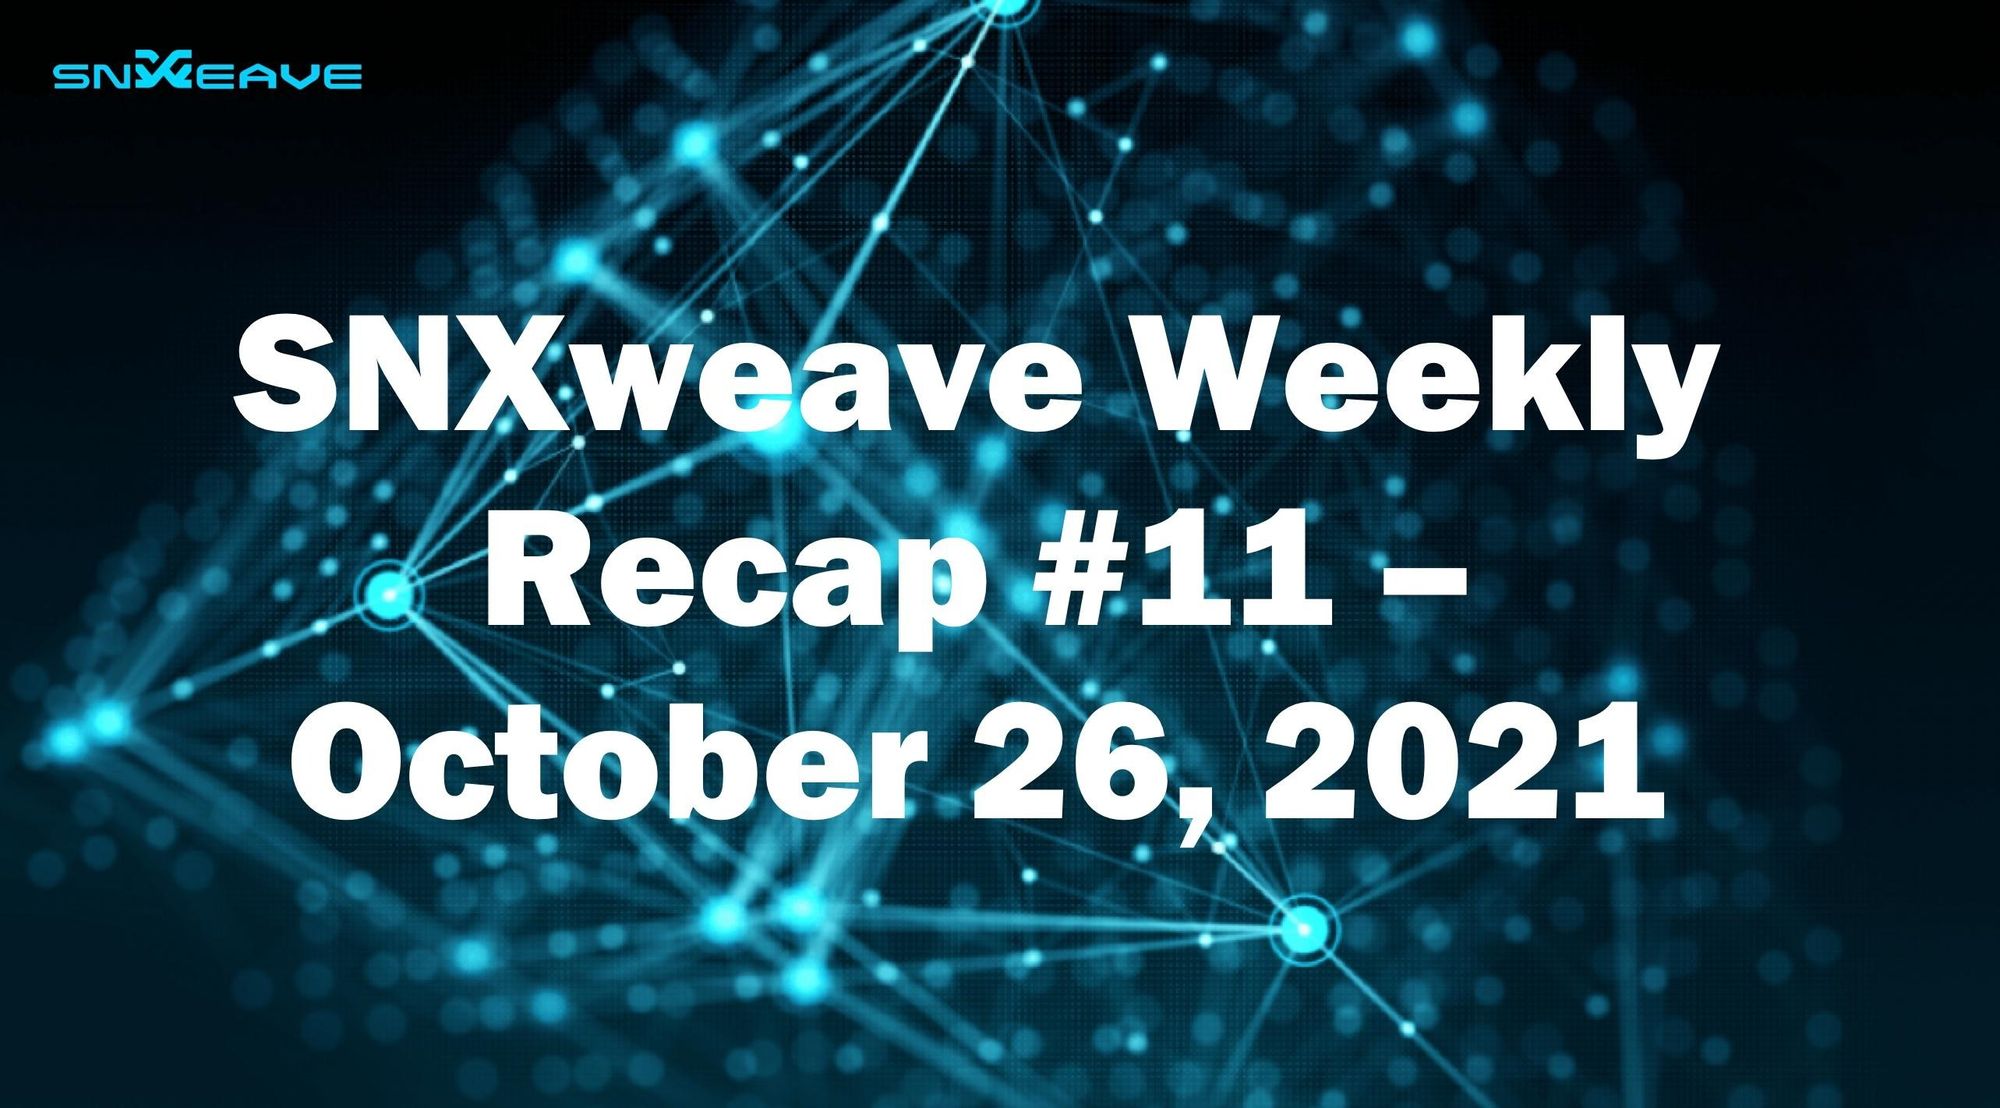 SNXweave Weekly Recap 11